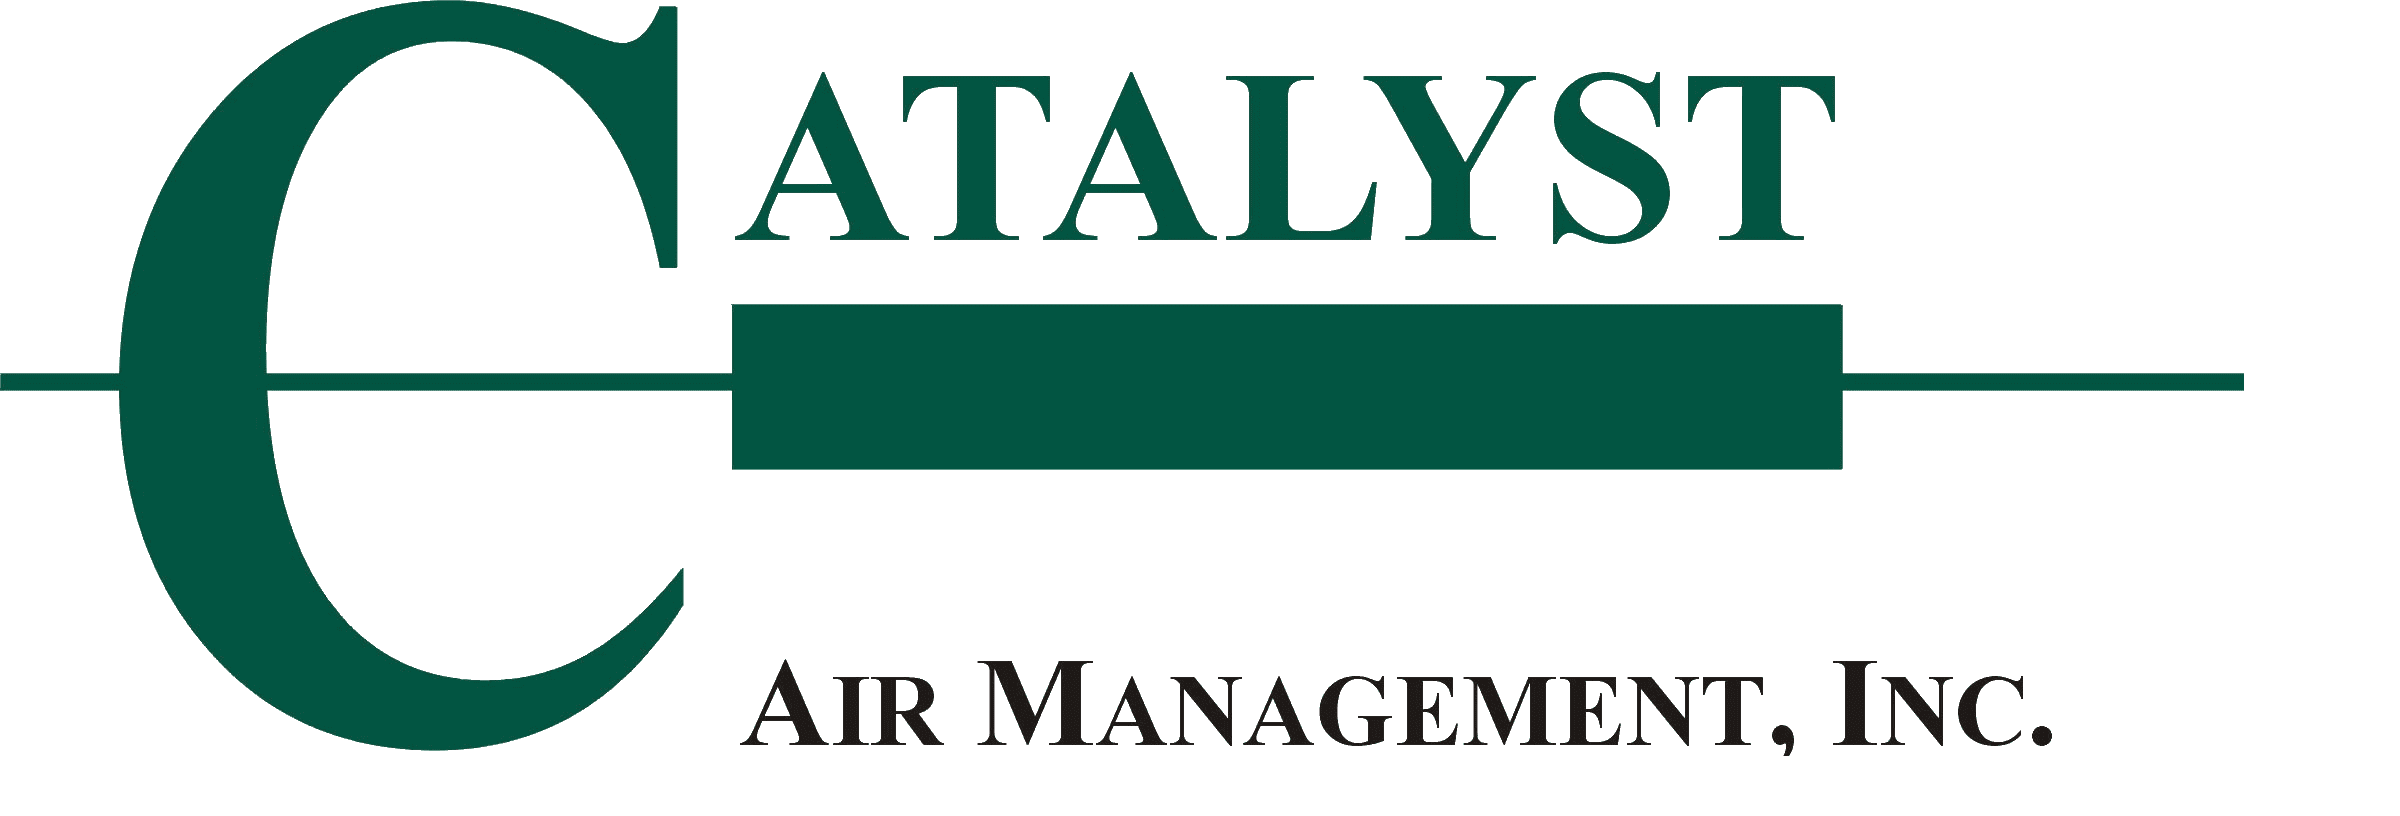 Catalyst Air